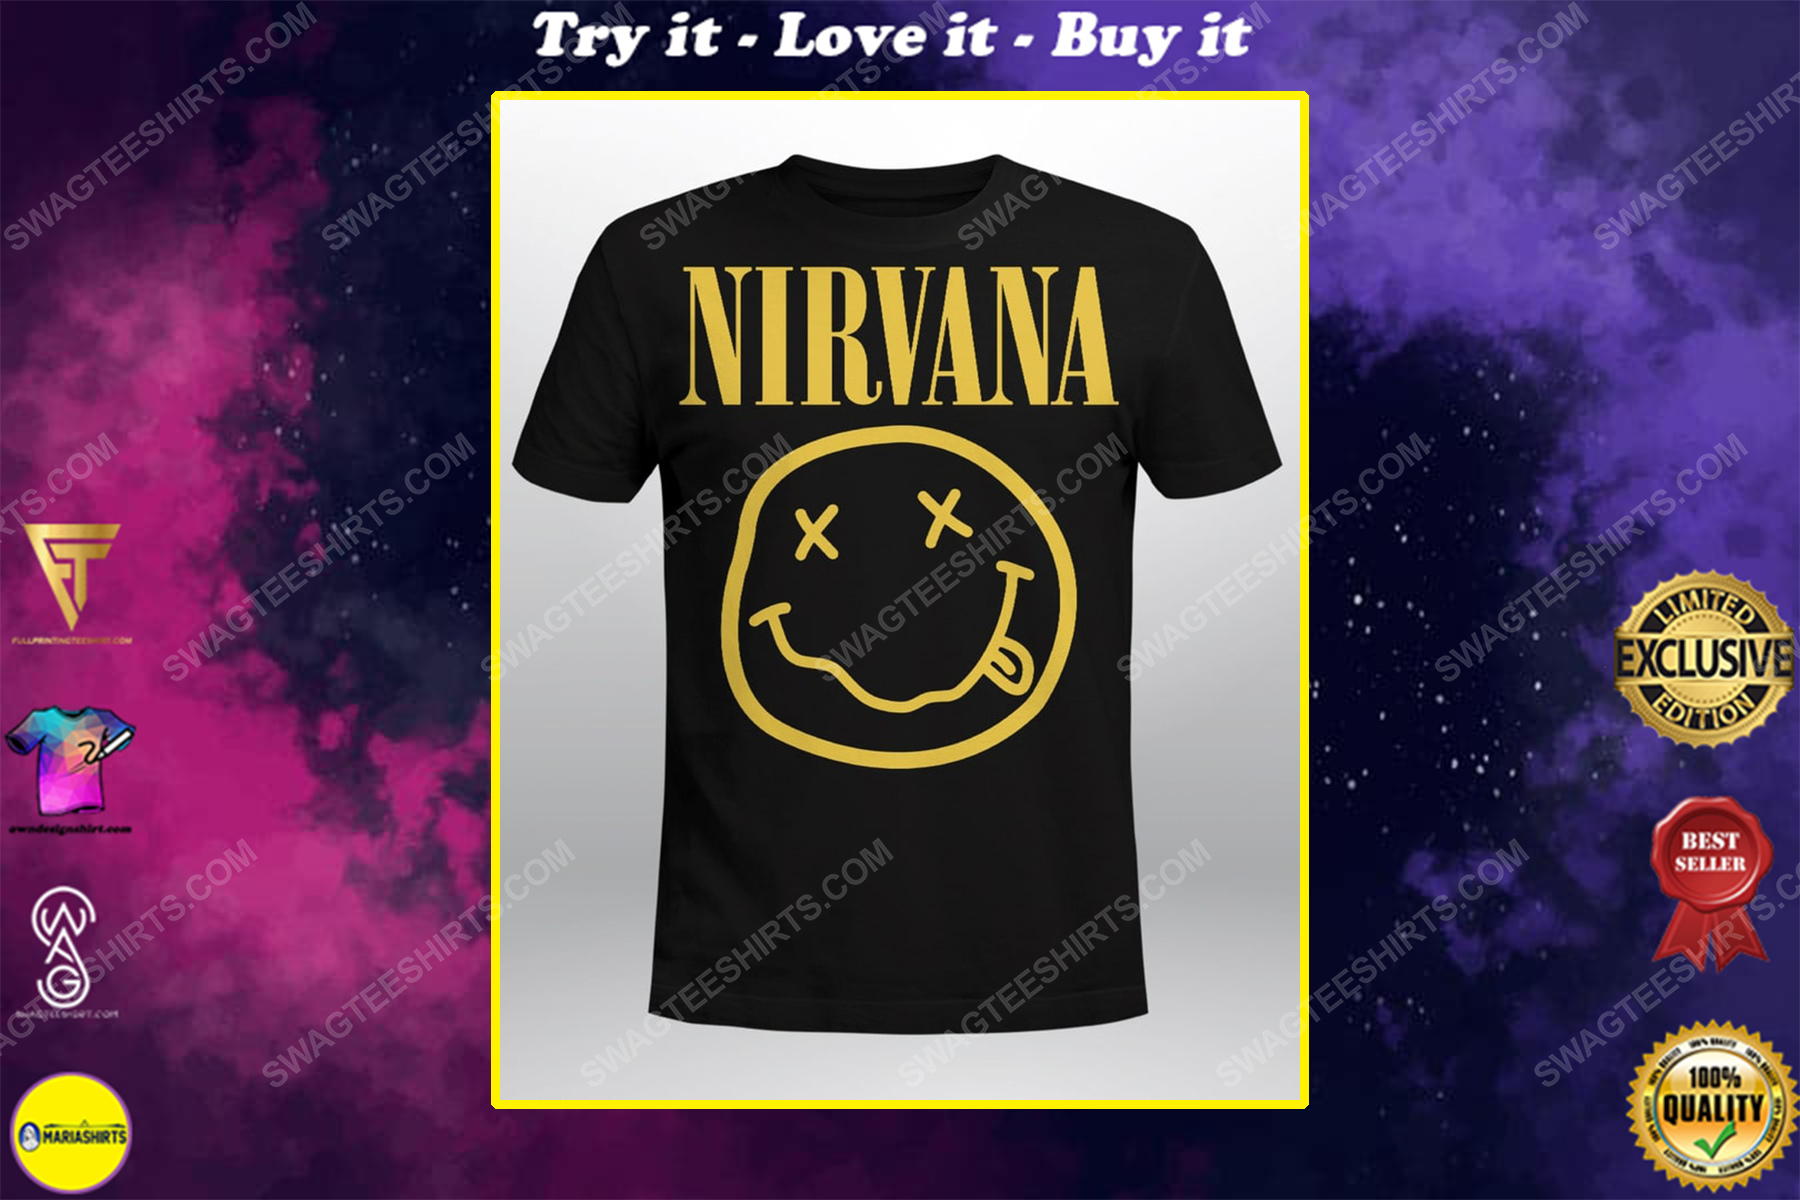 Vintage american rock band nirvana smiley shirt